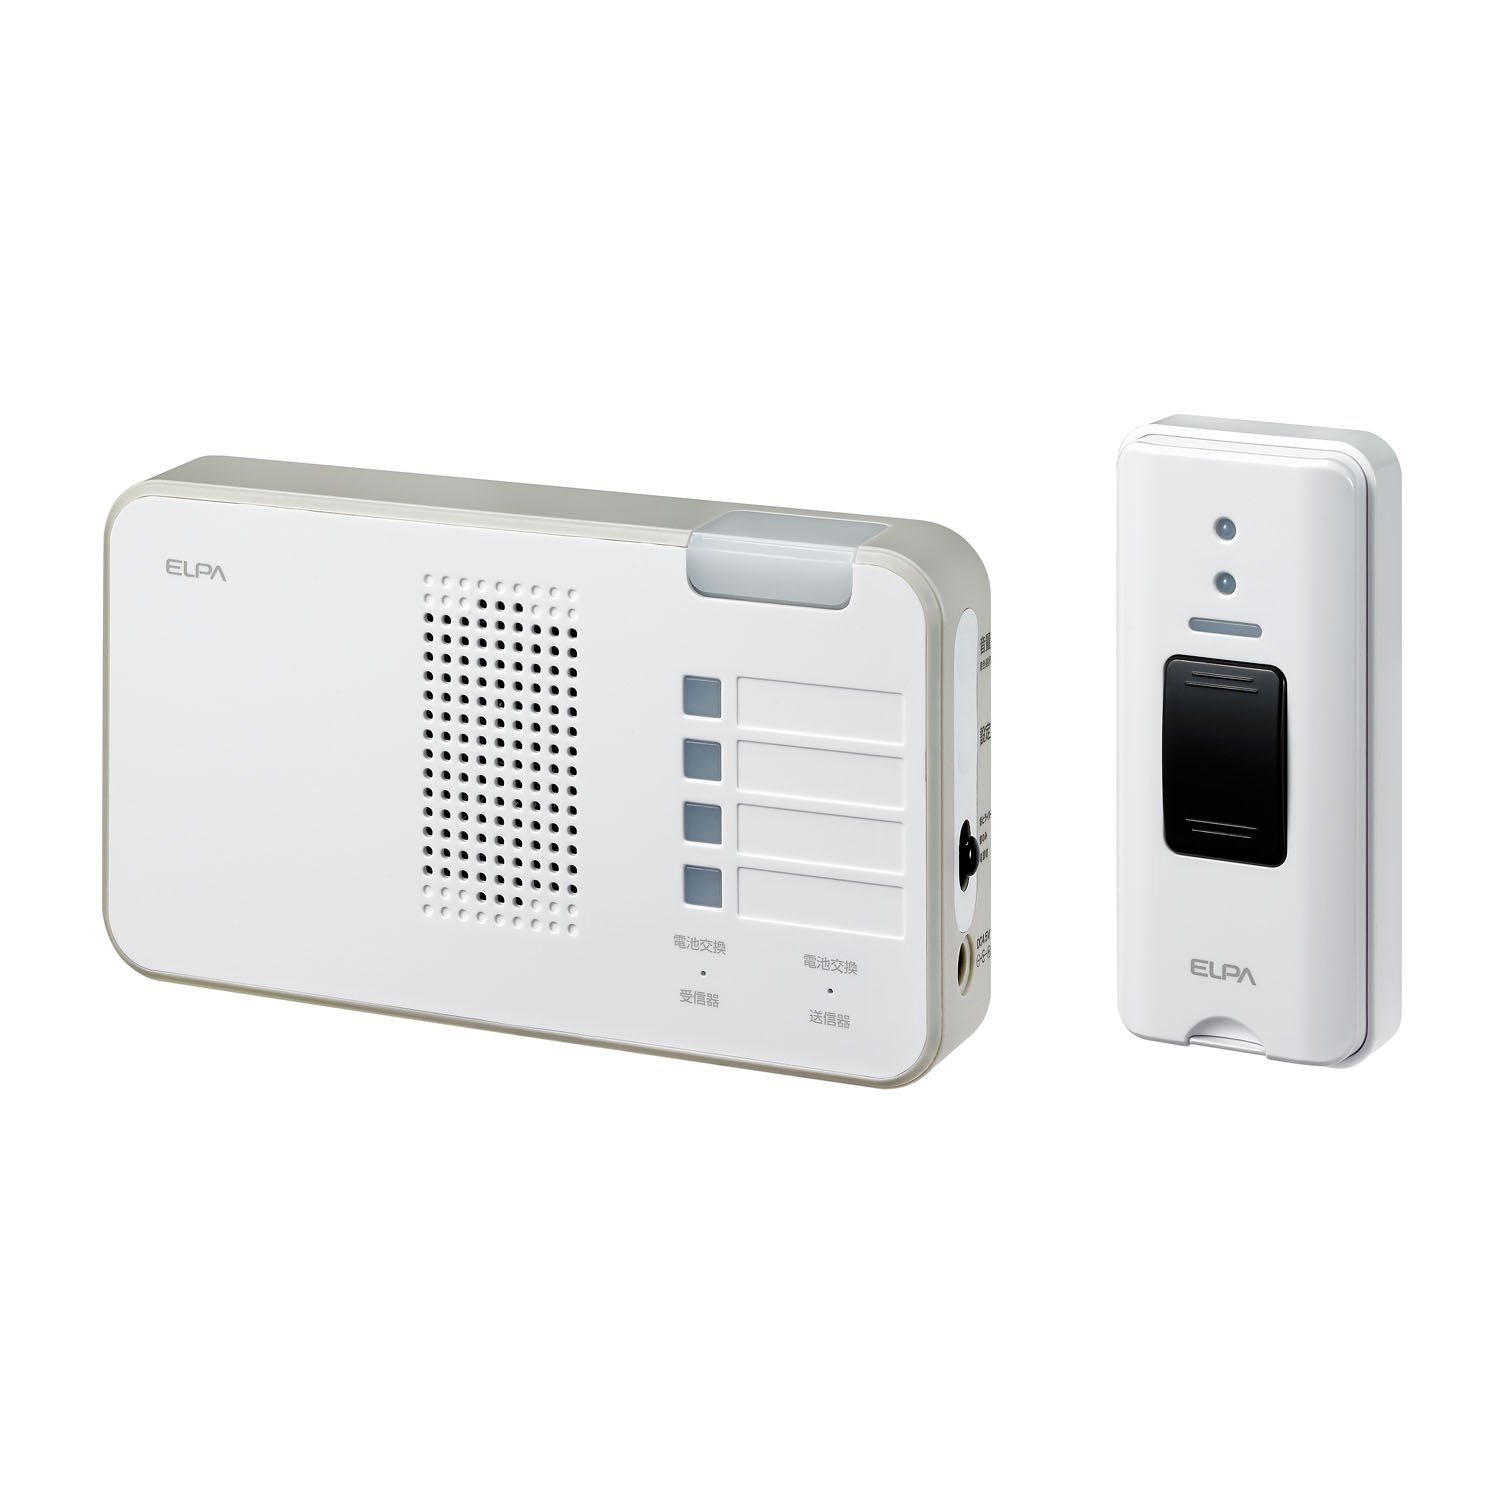 RA:エルパ ELPA ワイヤレスチャイムランプ付きセット 介護 オフィス 店舗 無線 配線不要 EWS-S5230